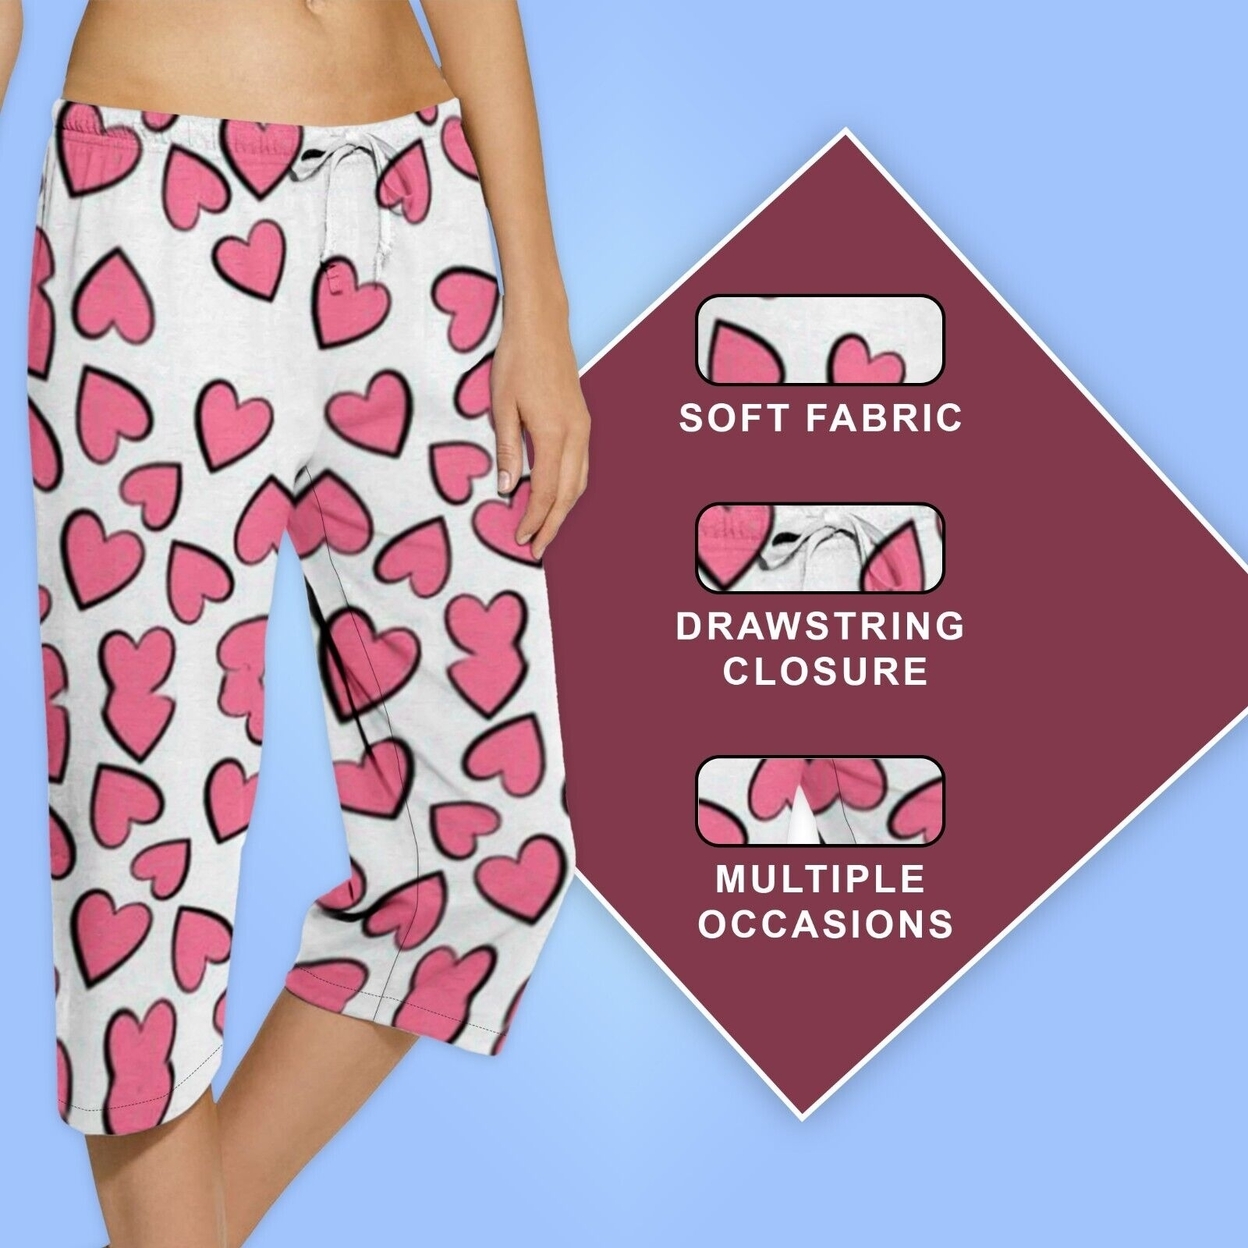 5-Pack: Women's Ultra-Soft Cozy Terry Knit Comfy Capri Sleepwear Pajama Bottoms - Large, Shapes